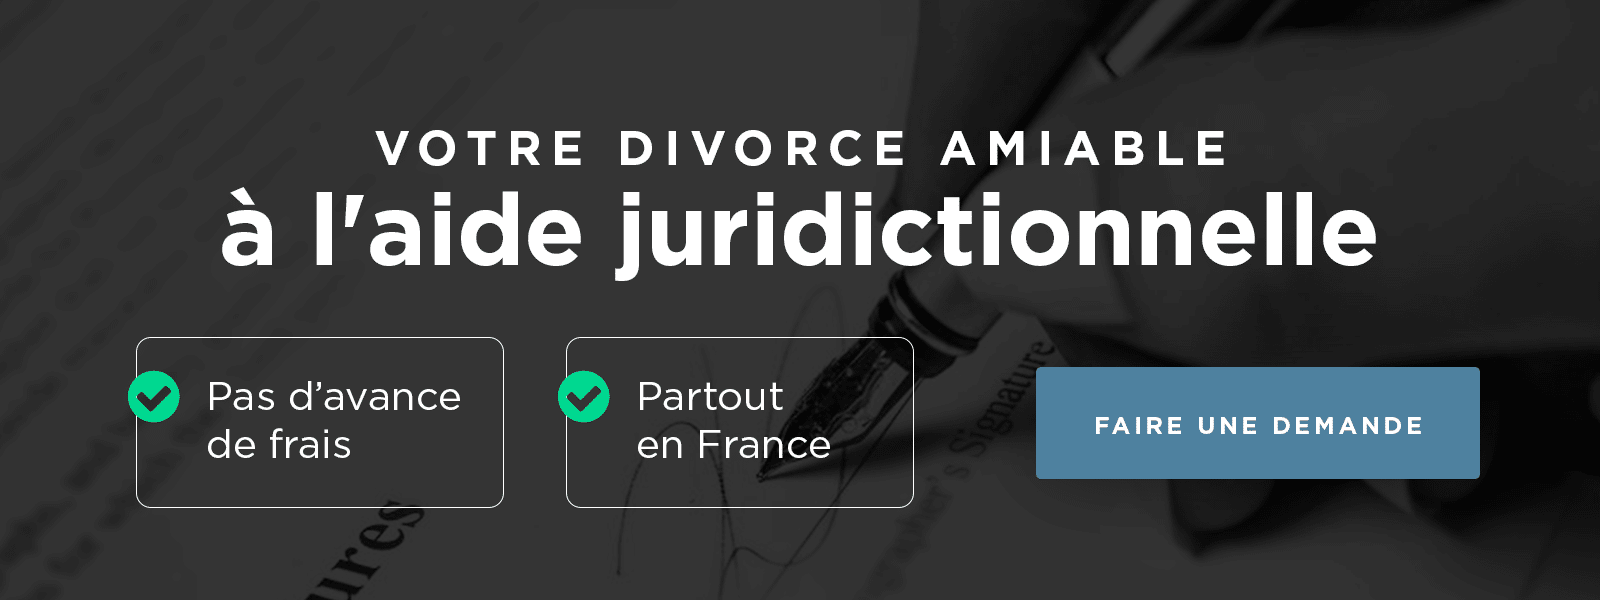 Avocat Divorce Amiable Strasbourg Aide Juridictionnelle